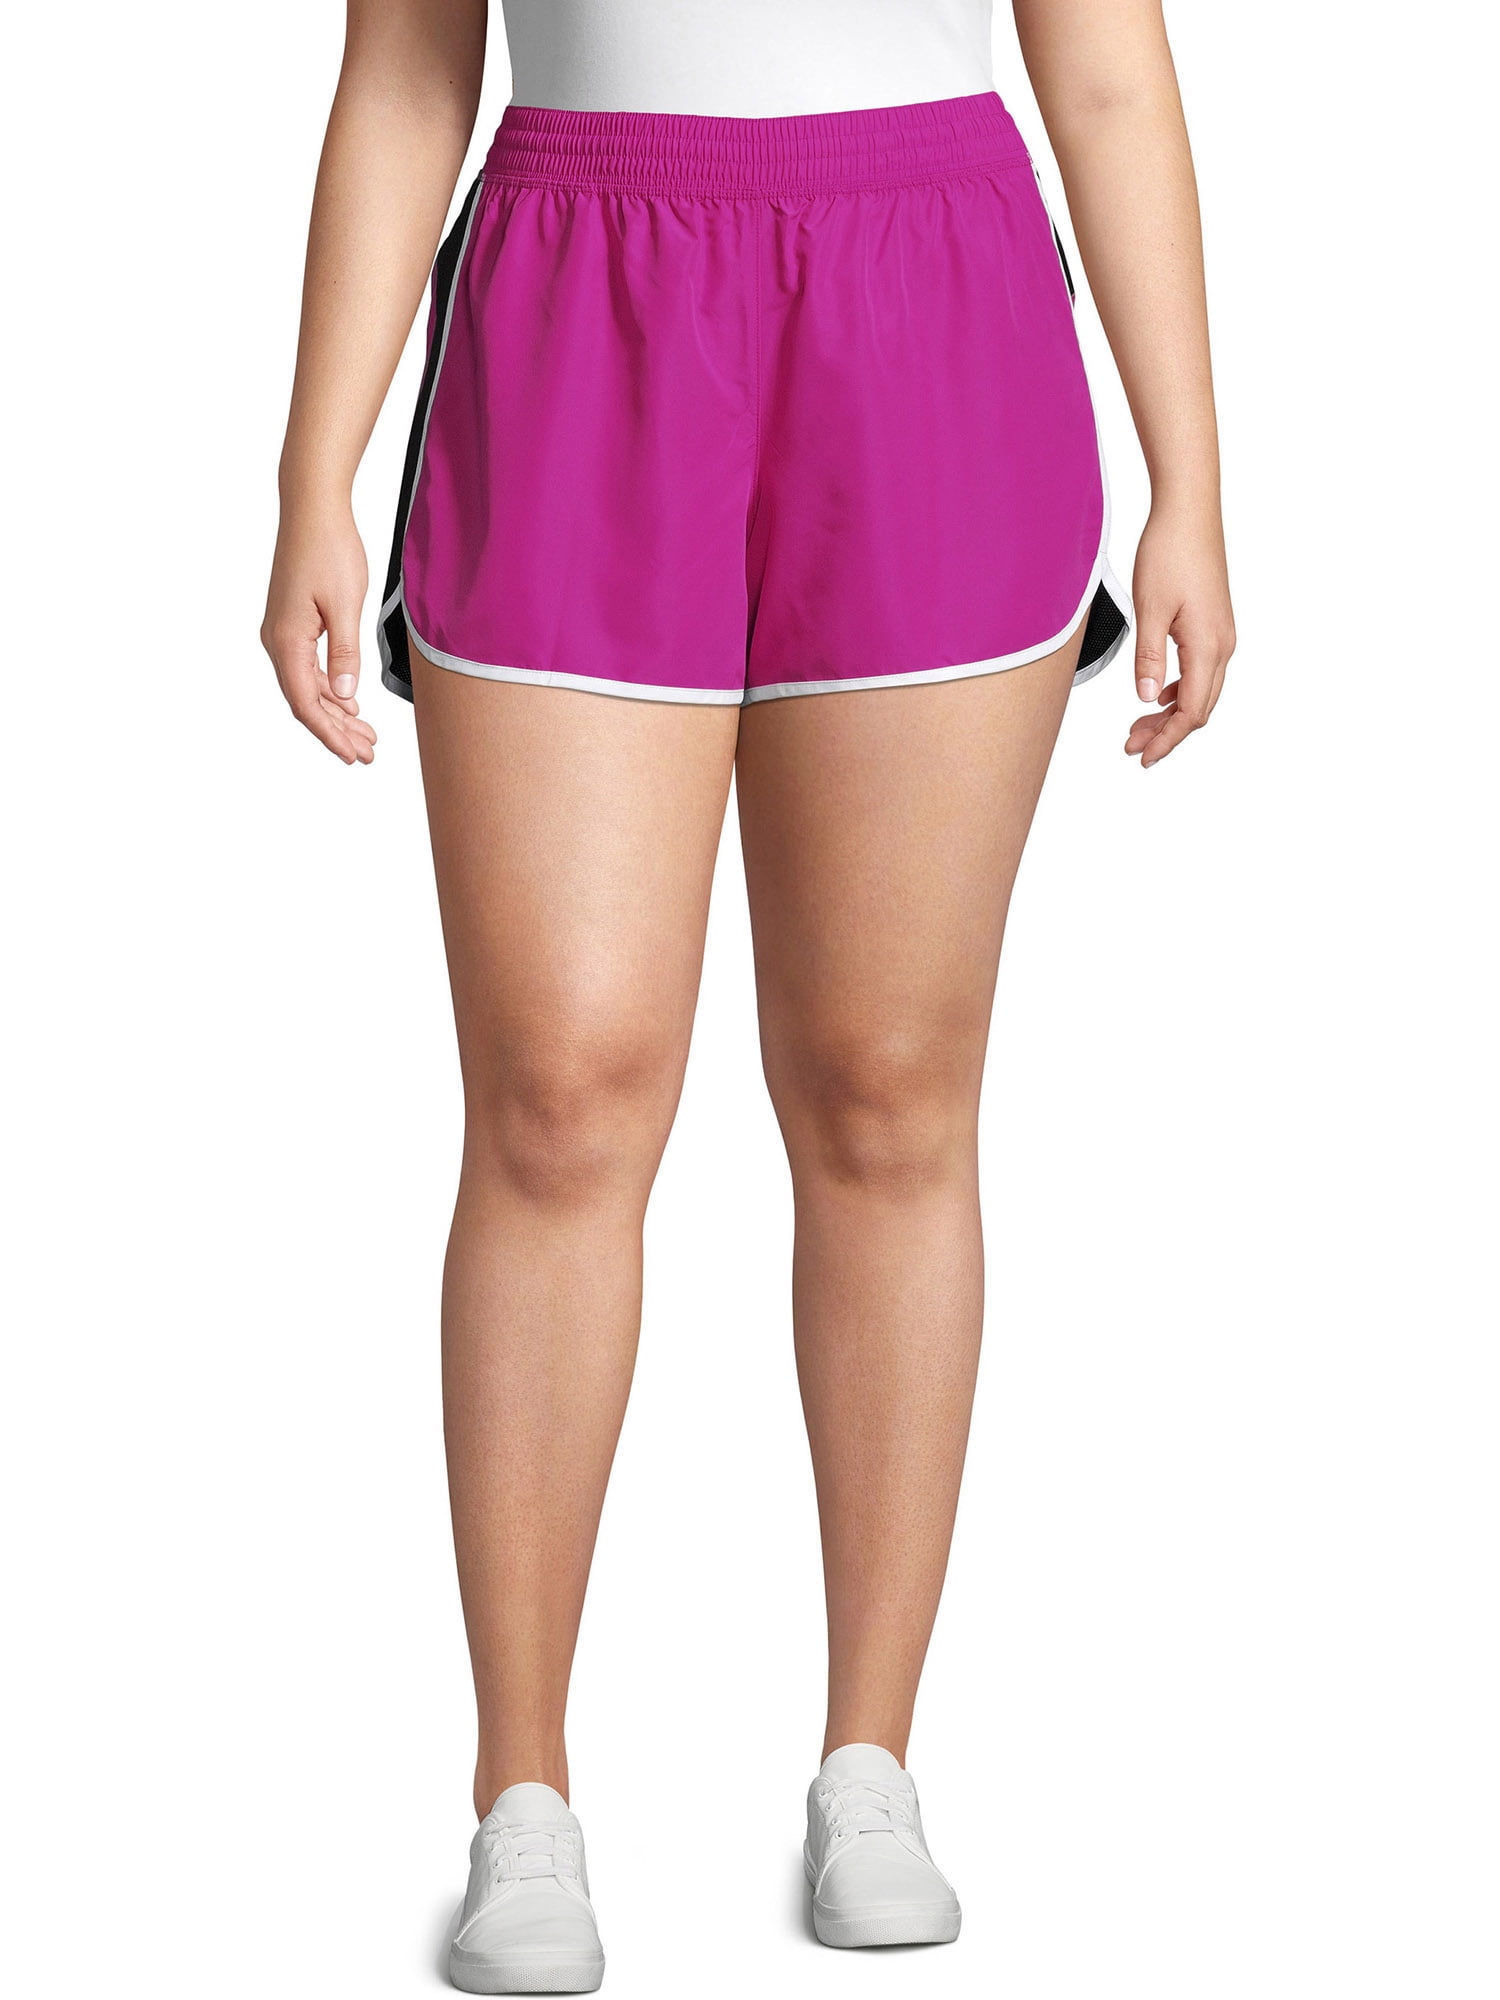 Xersion Girls Athletic shorts Plus Size L 14.5-16.5 Quick Dri